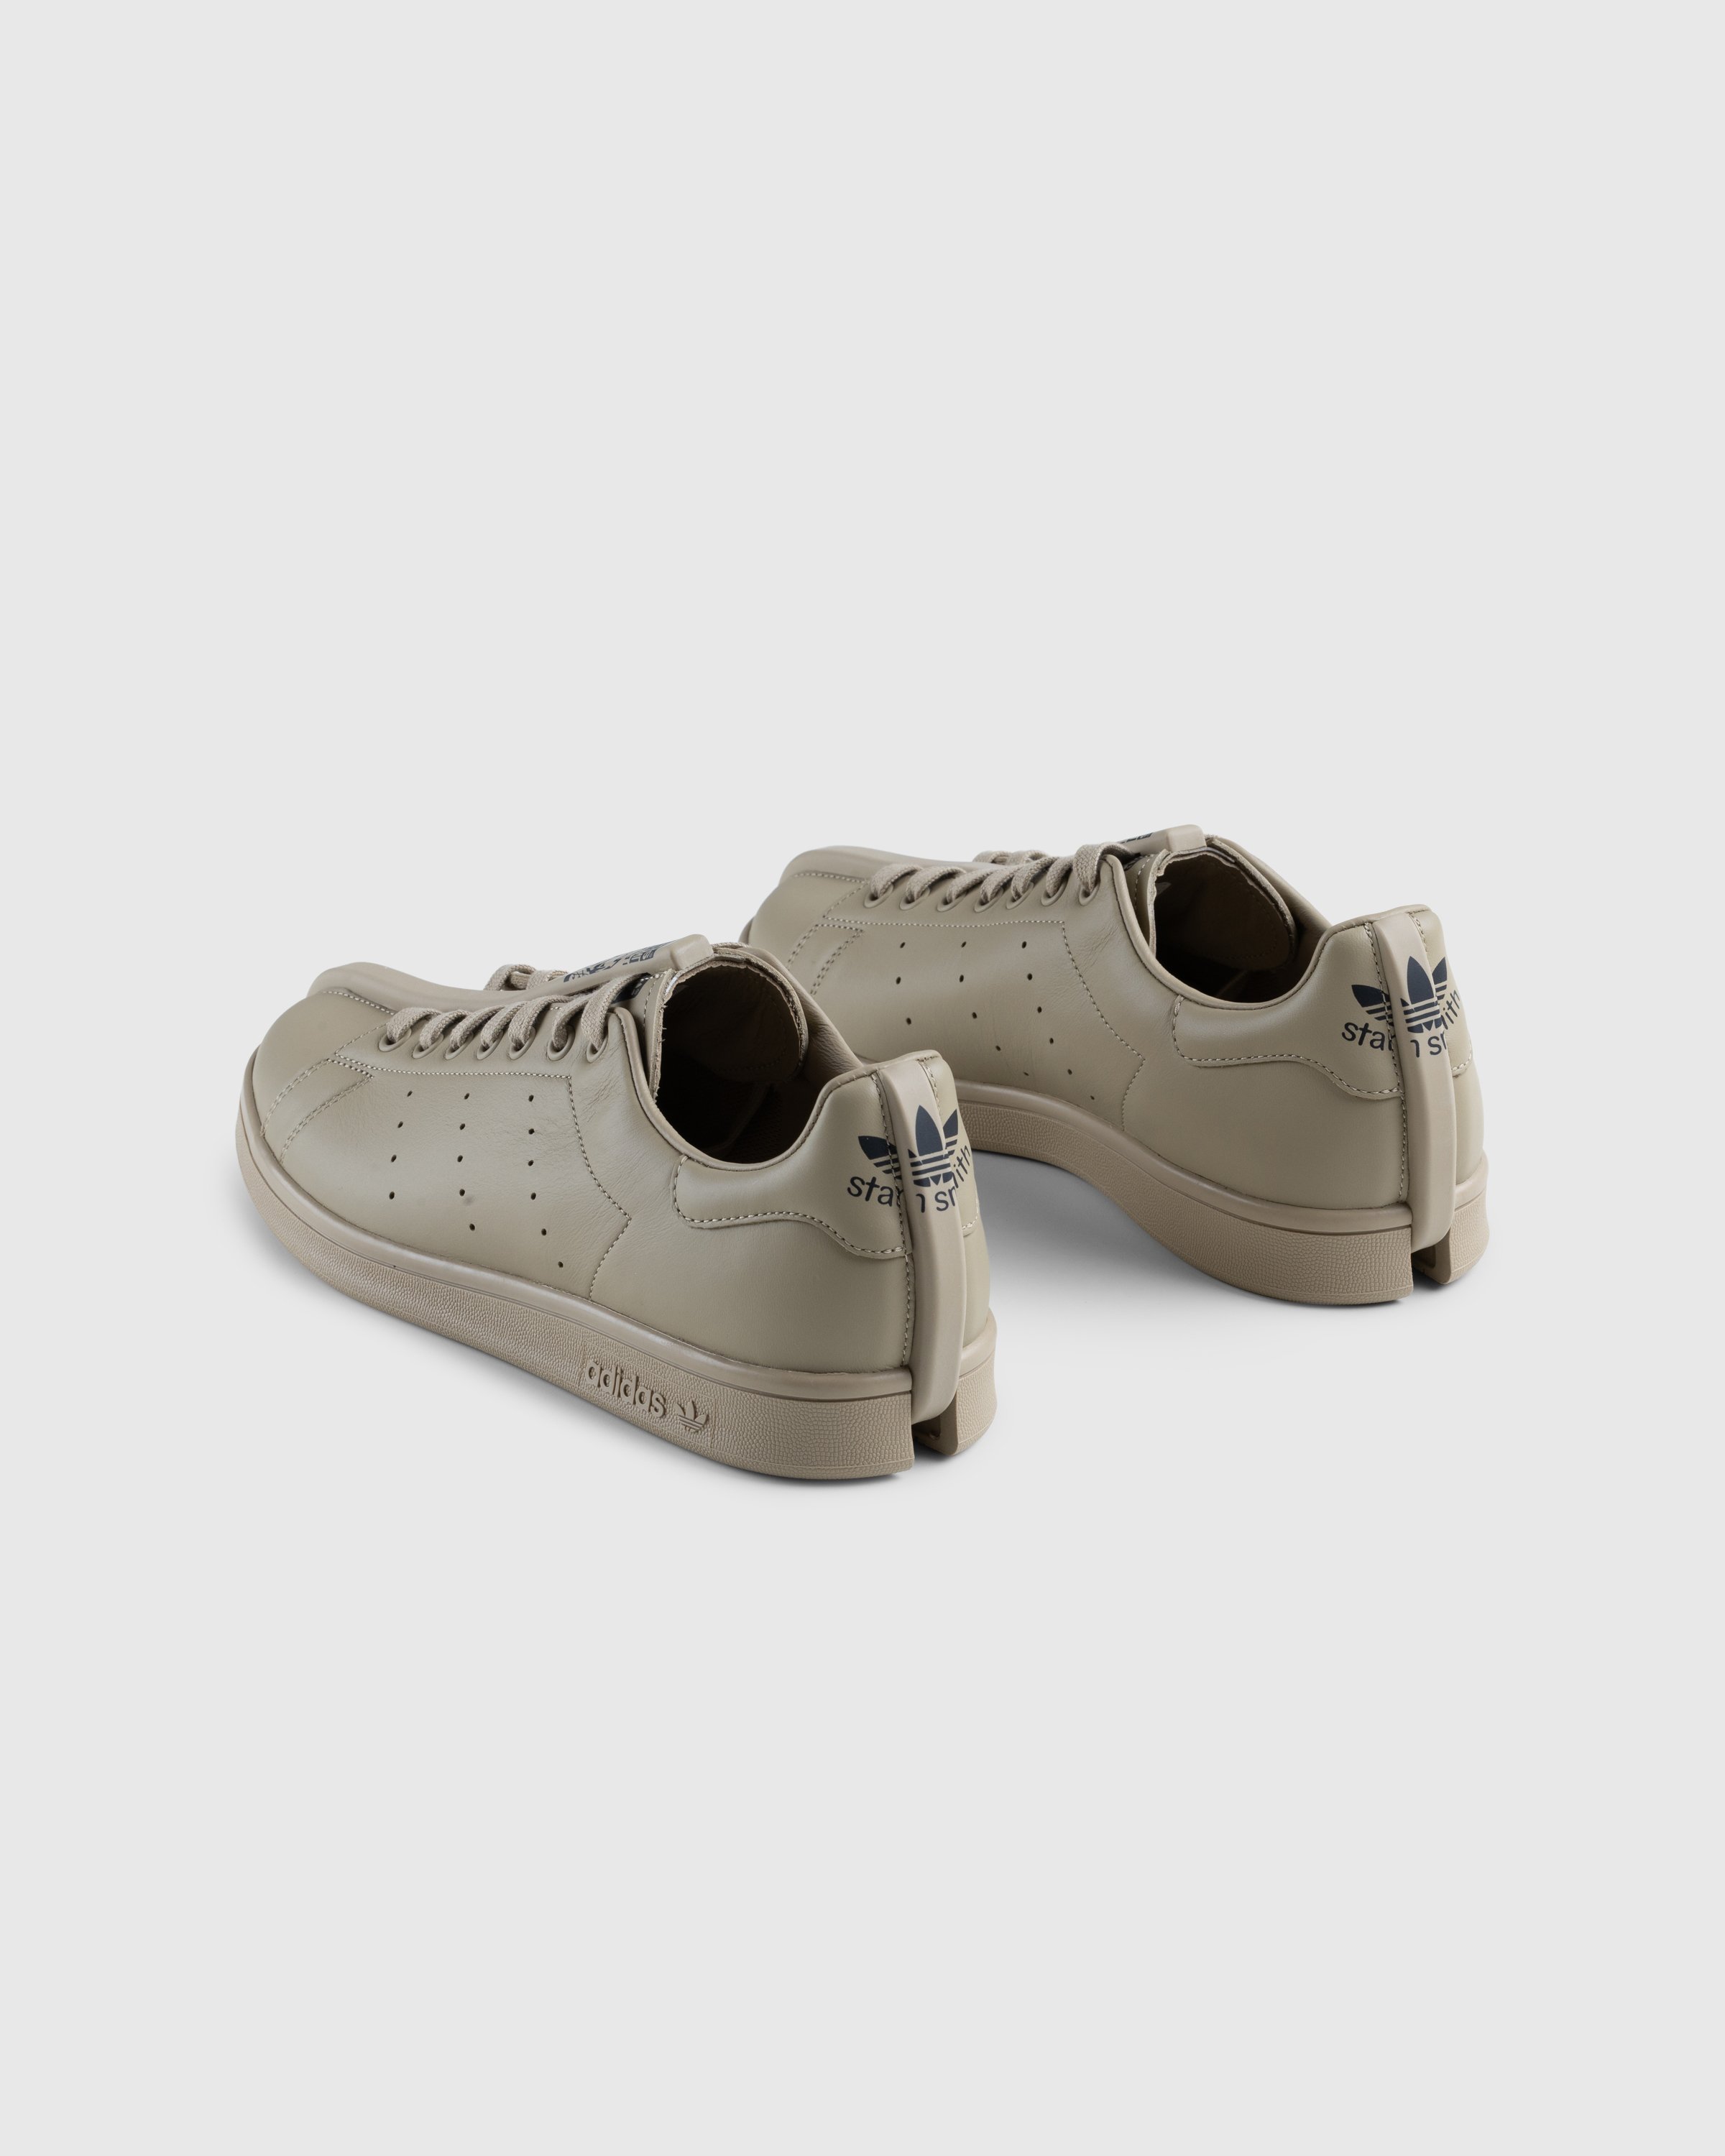 Craig Green x Adidas - CG Split Stan Smith beige tone/beige tone/core black - Footwear - Beige - Image 4